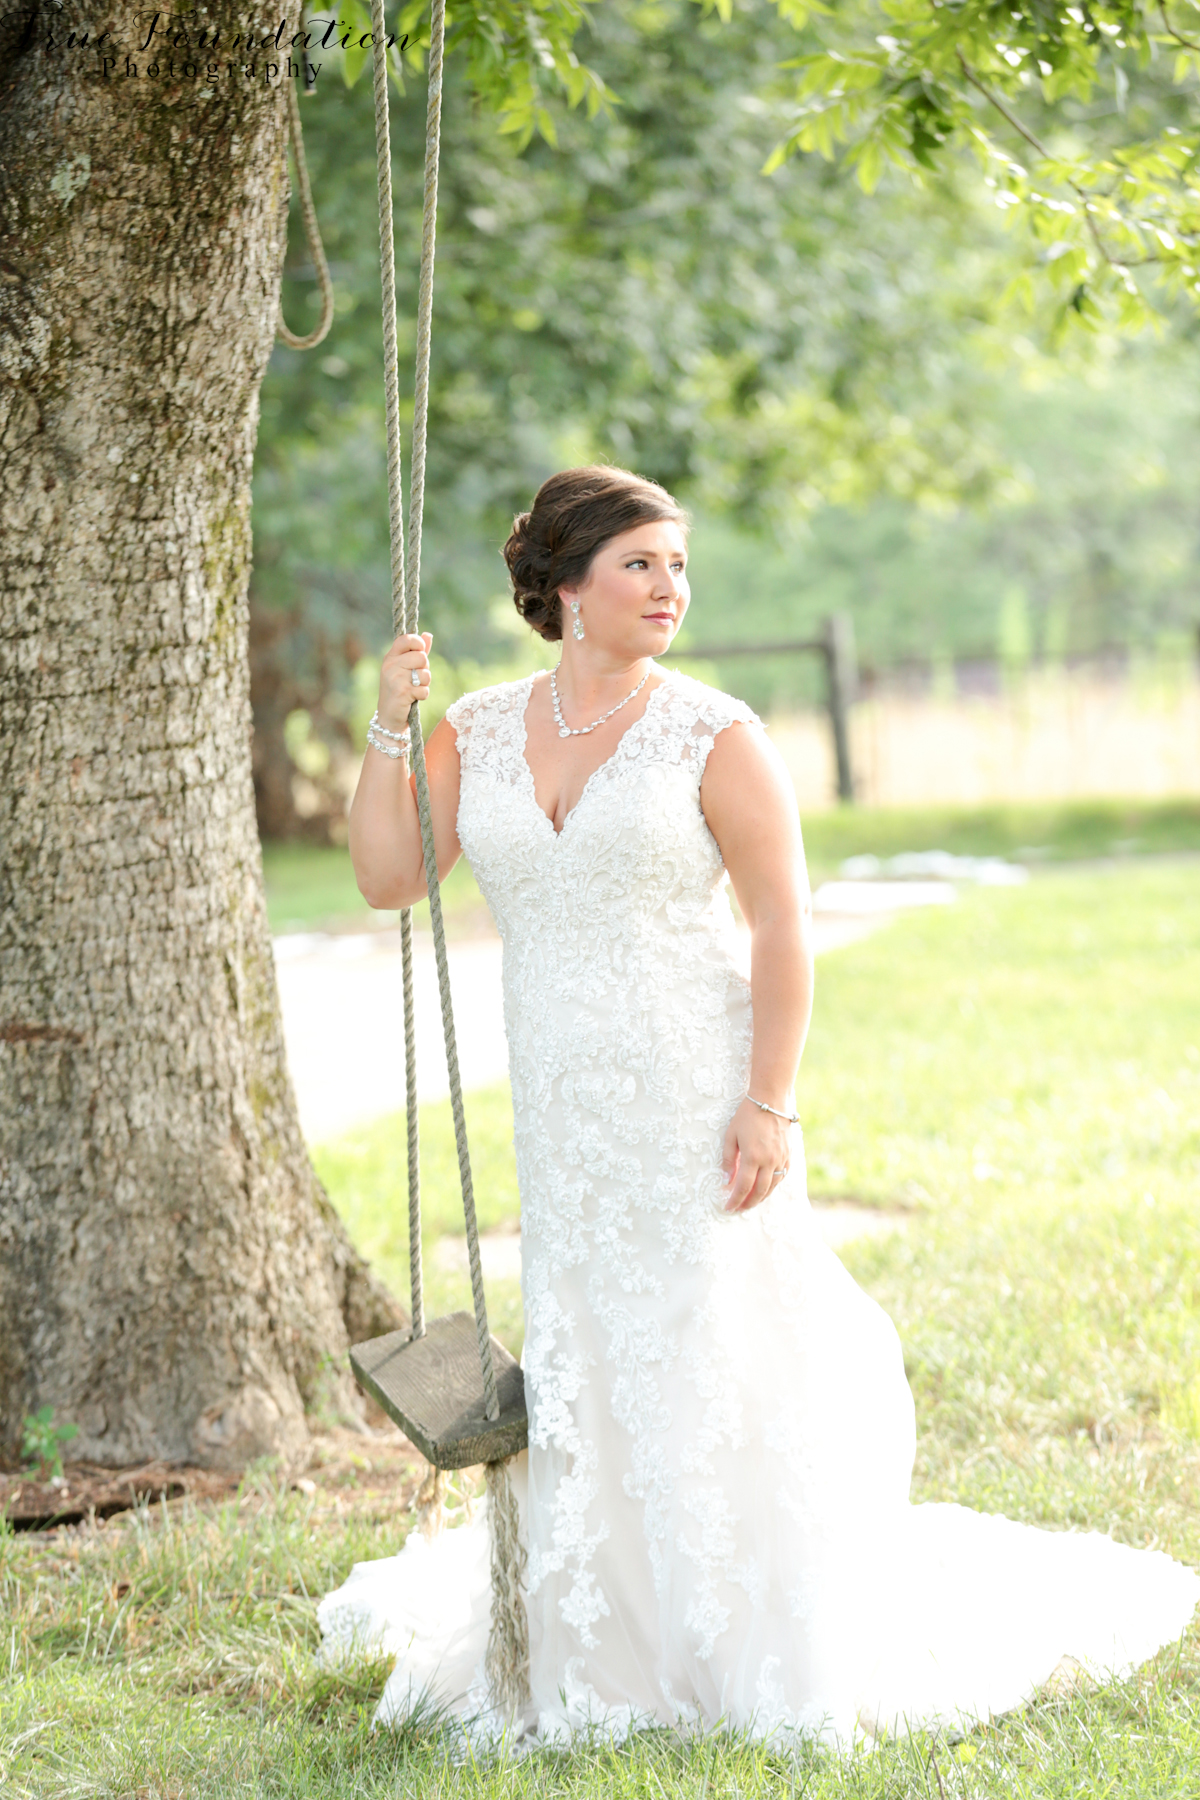 Bridal - Portrait - Photography - Photos - Hendersonville - NC - Shelby - Photographers - Farm - Country - Pinterest - Bride (27)